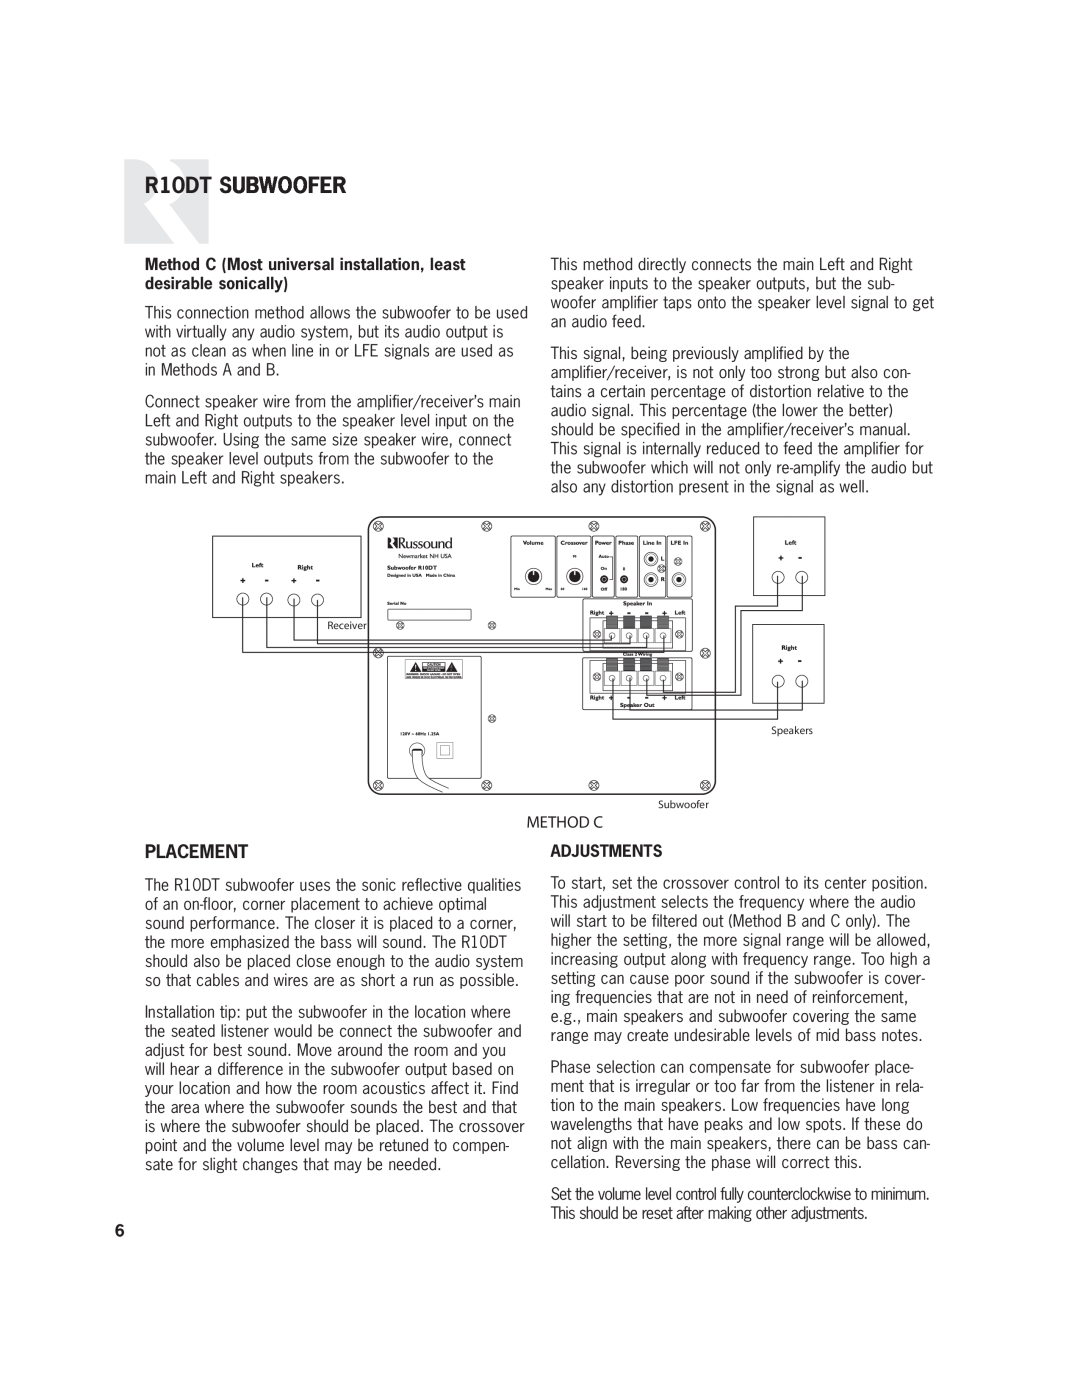 Russound user manual Method C, Placement, R10DT SUBWOOFER 